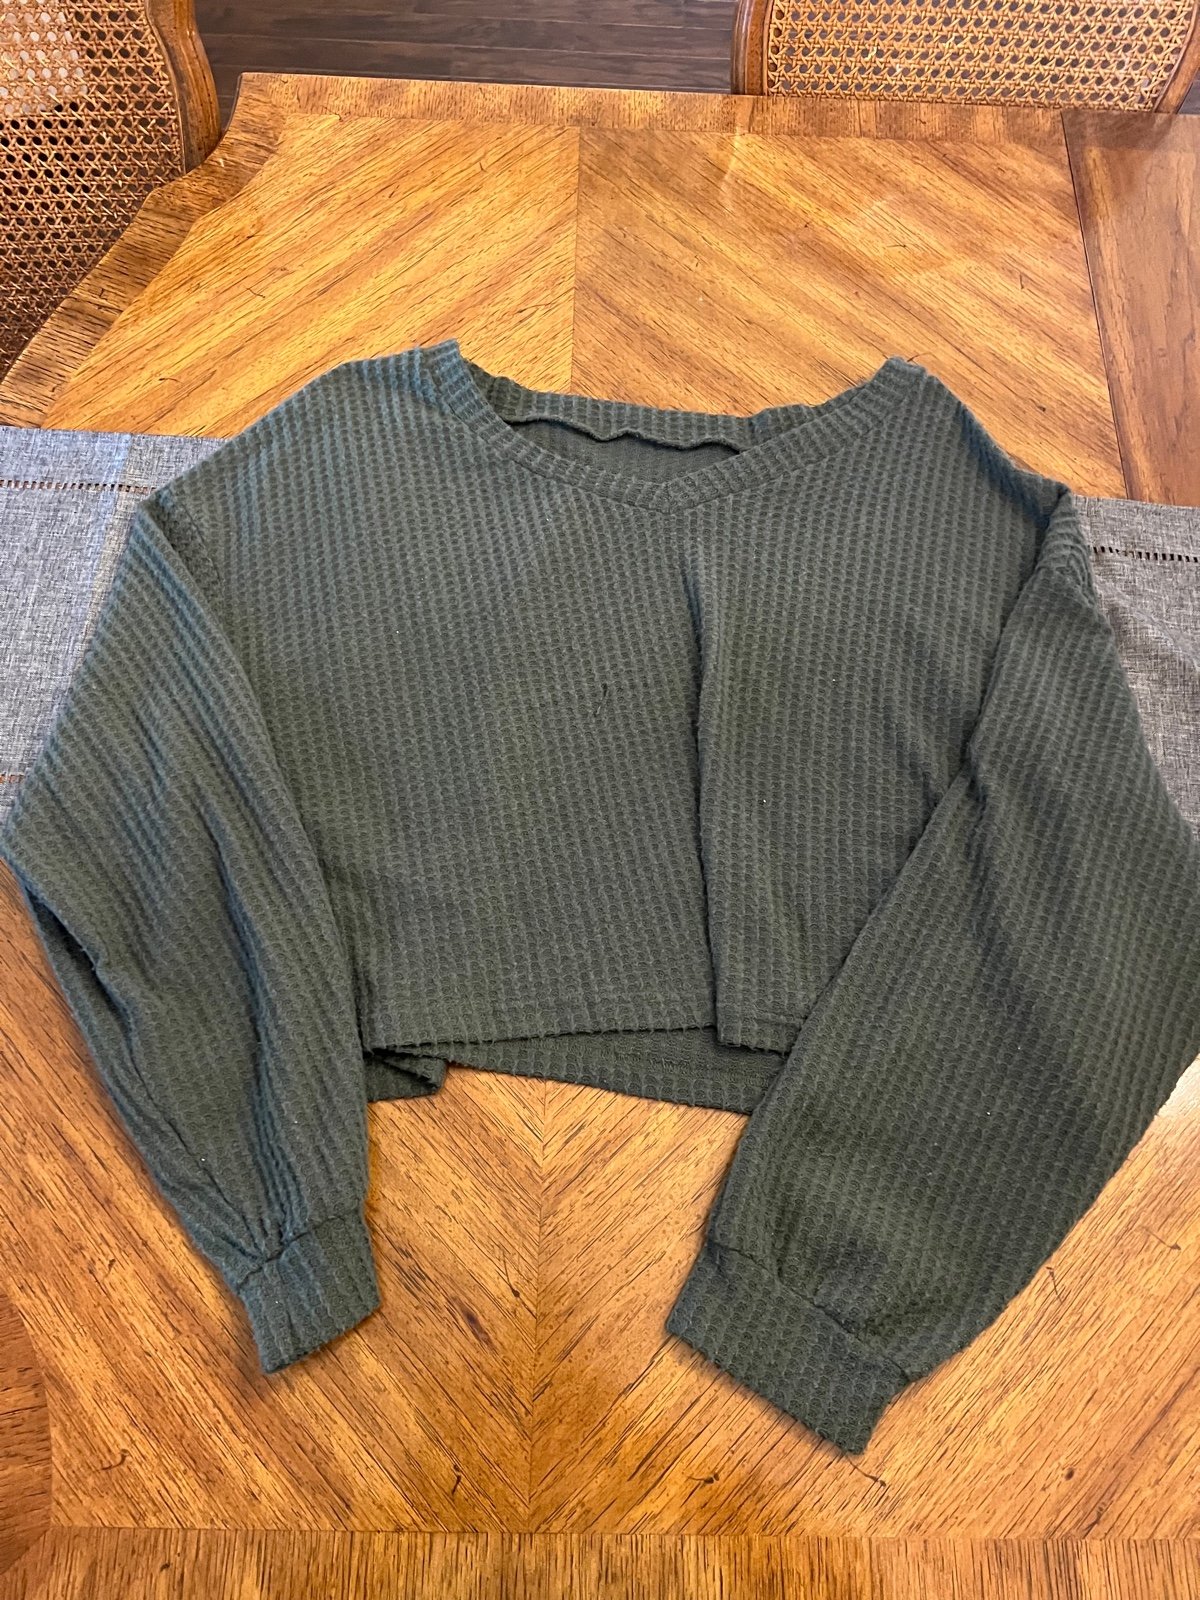 Comfortable Green waffle knit sweater KtMMK5yTe Low Pri